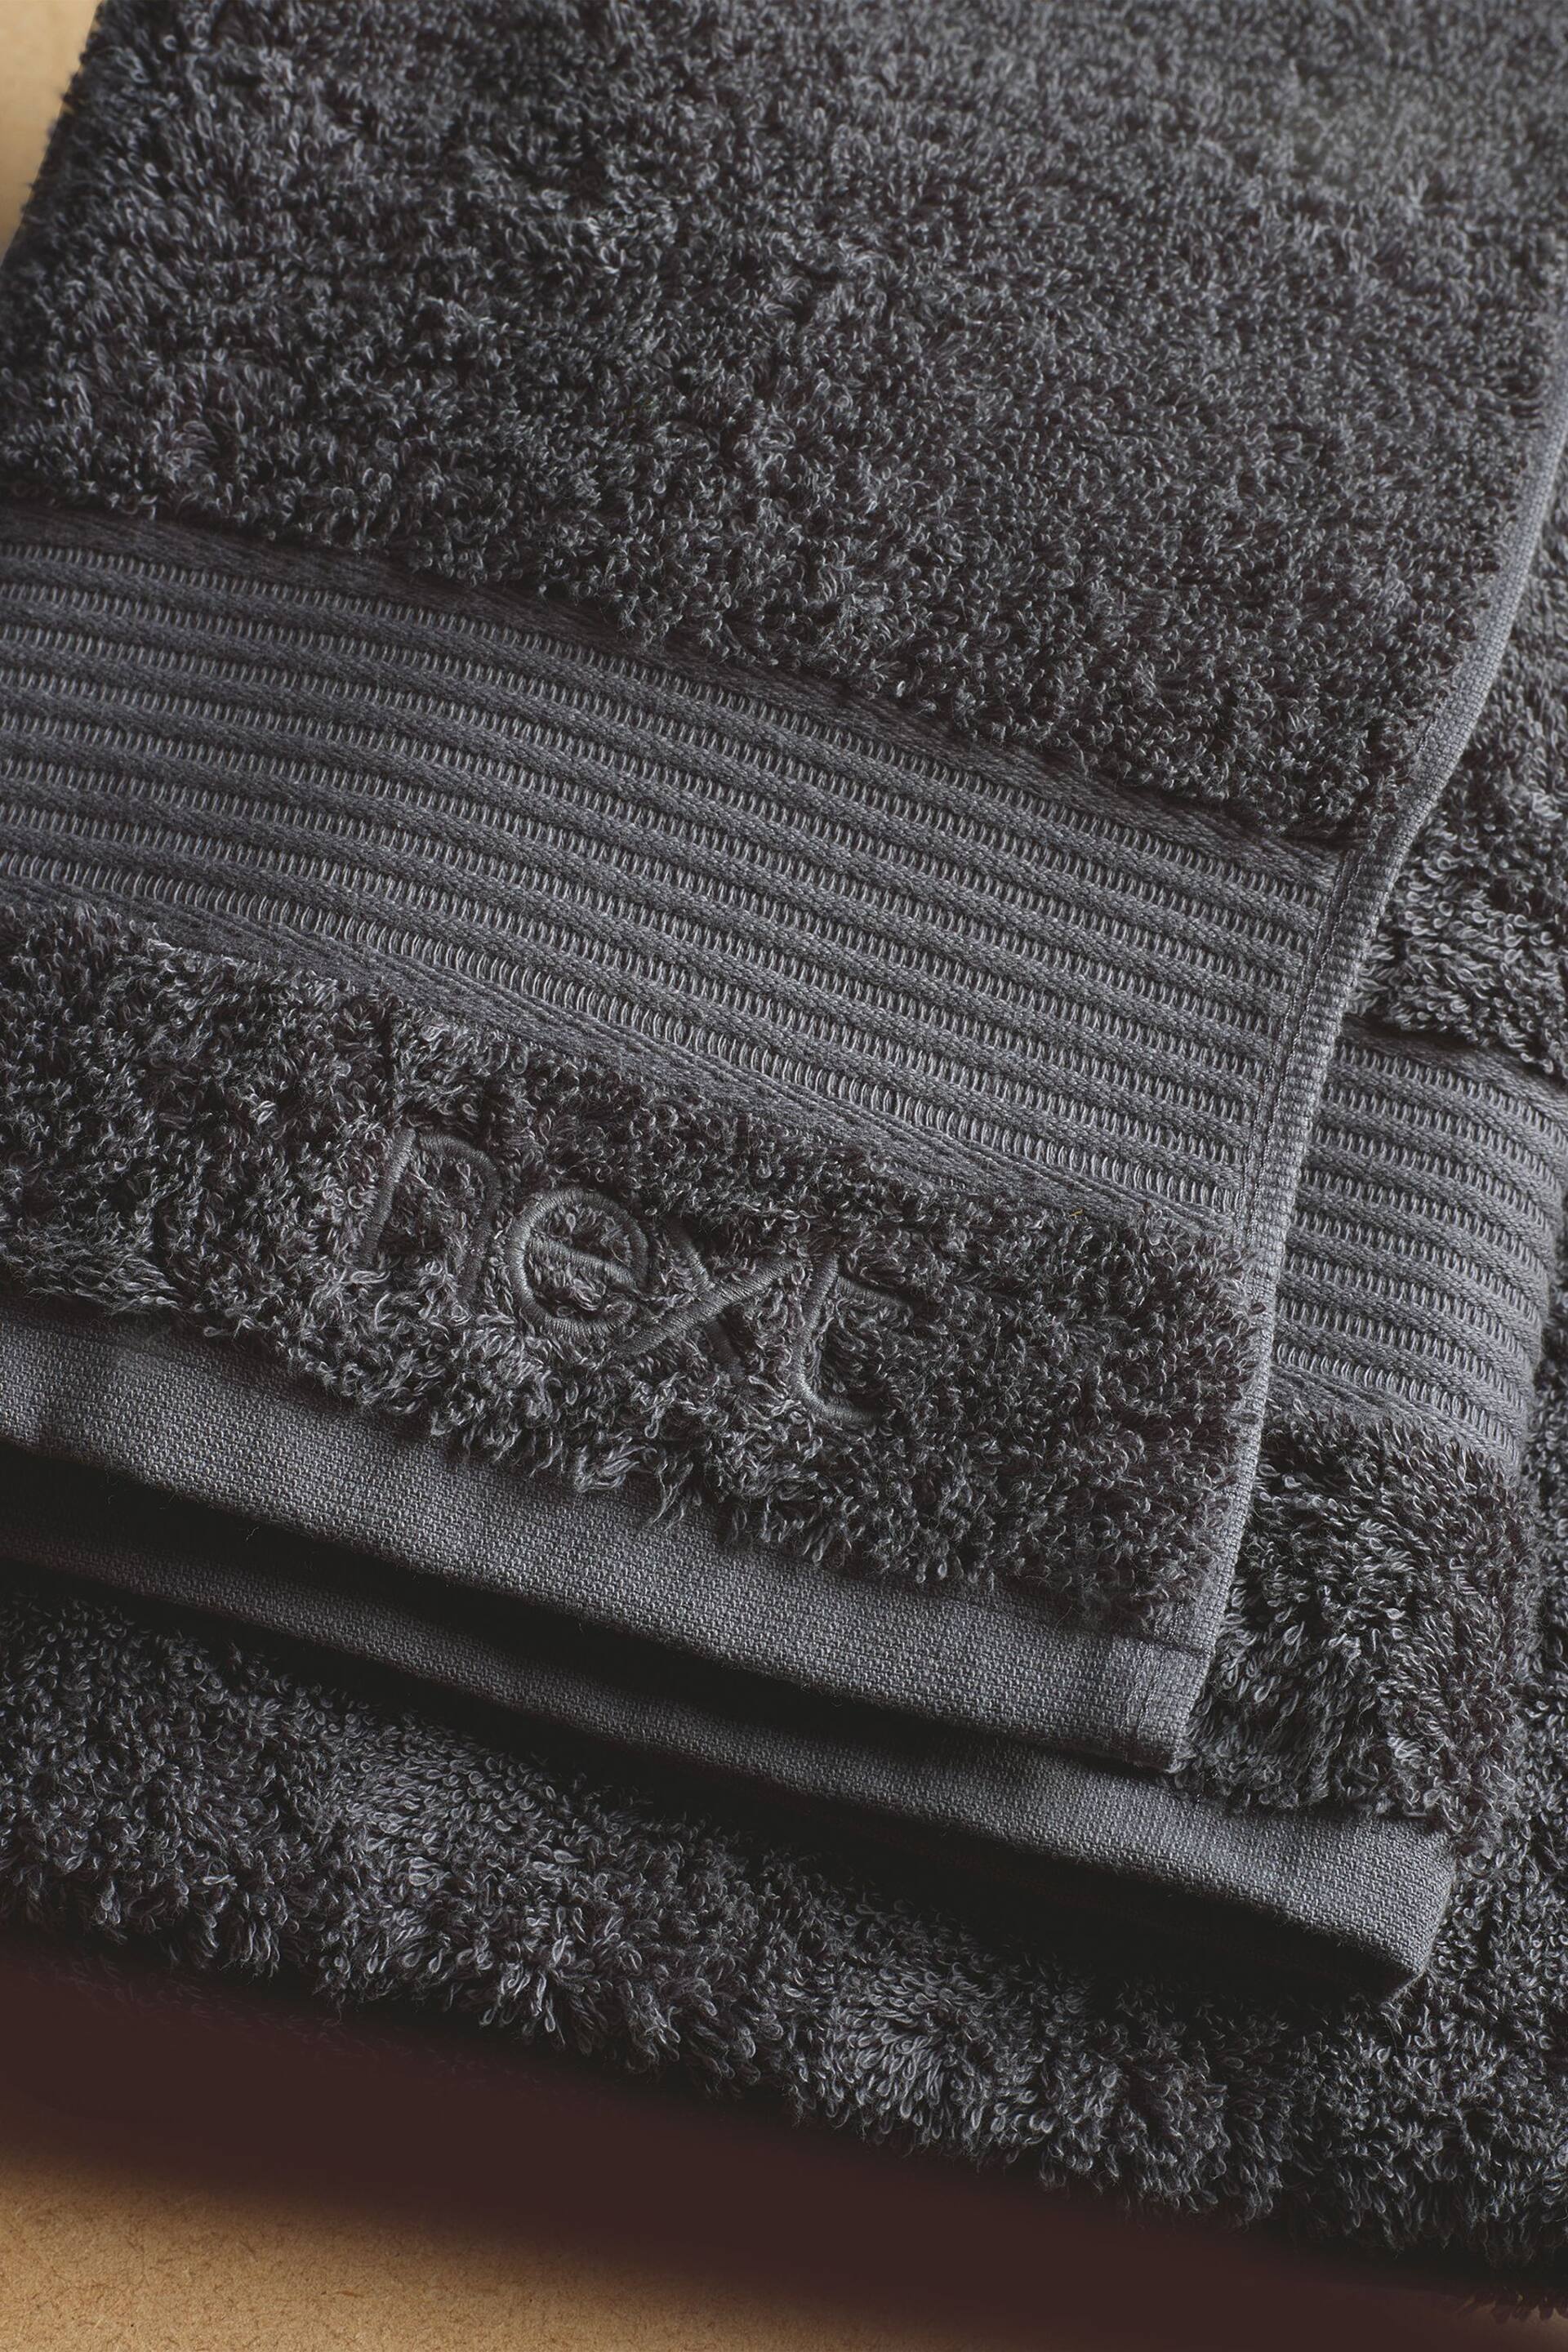 Grey Charcoal Egyptian Cotton Towel - Image 2 of 4